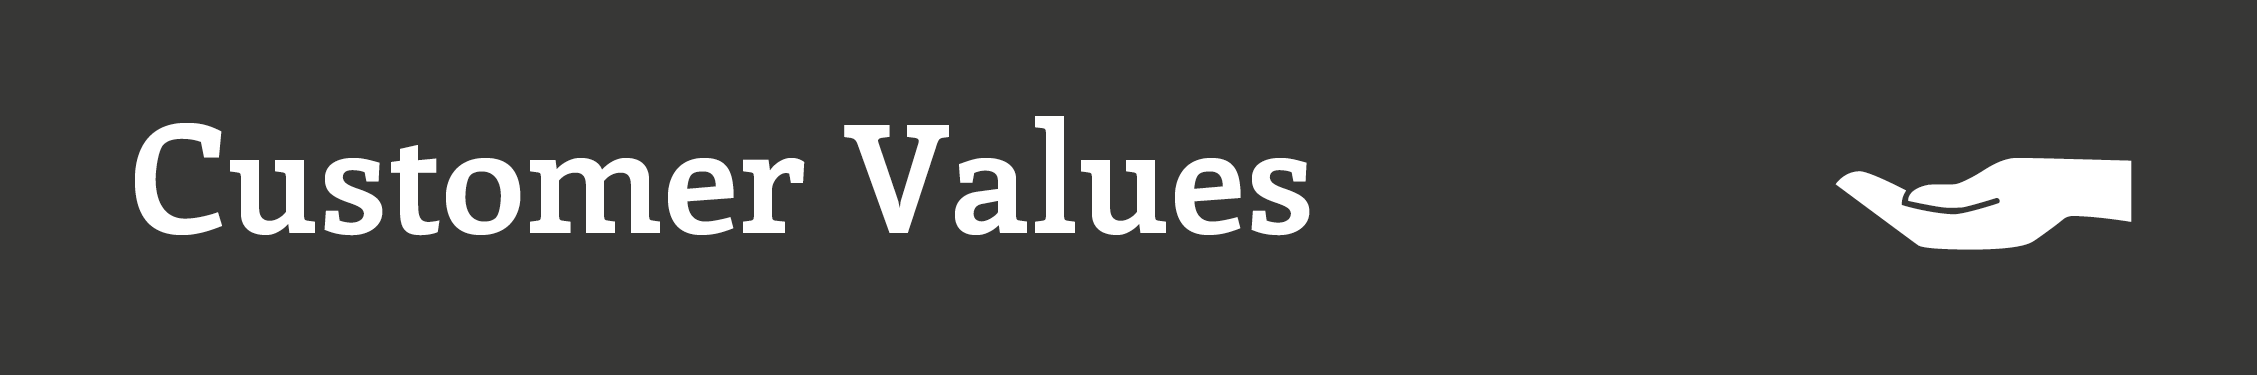 Customer Values